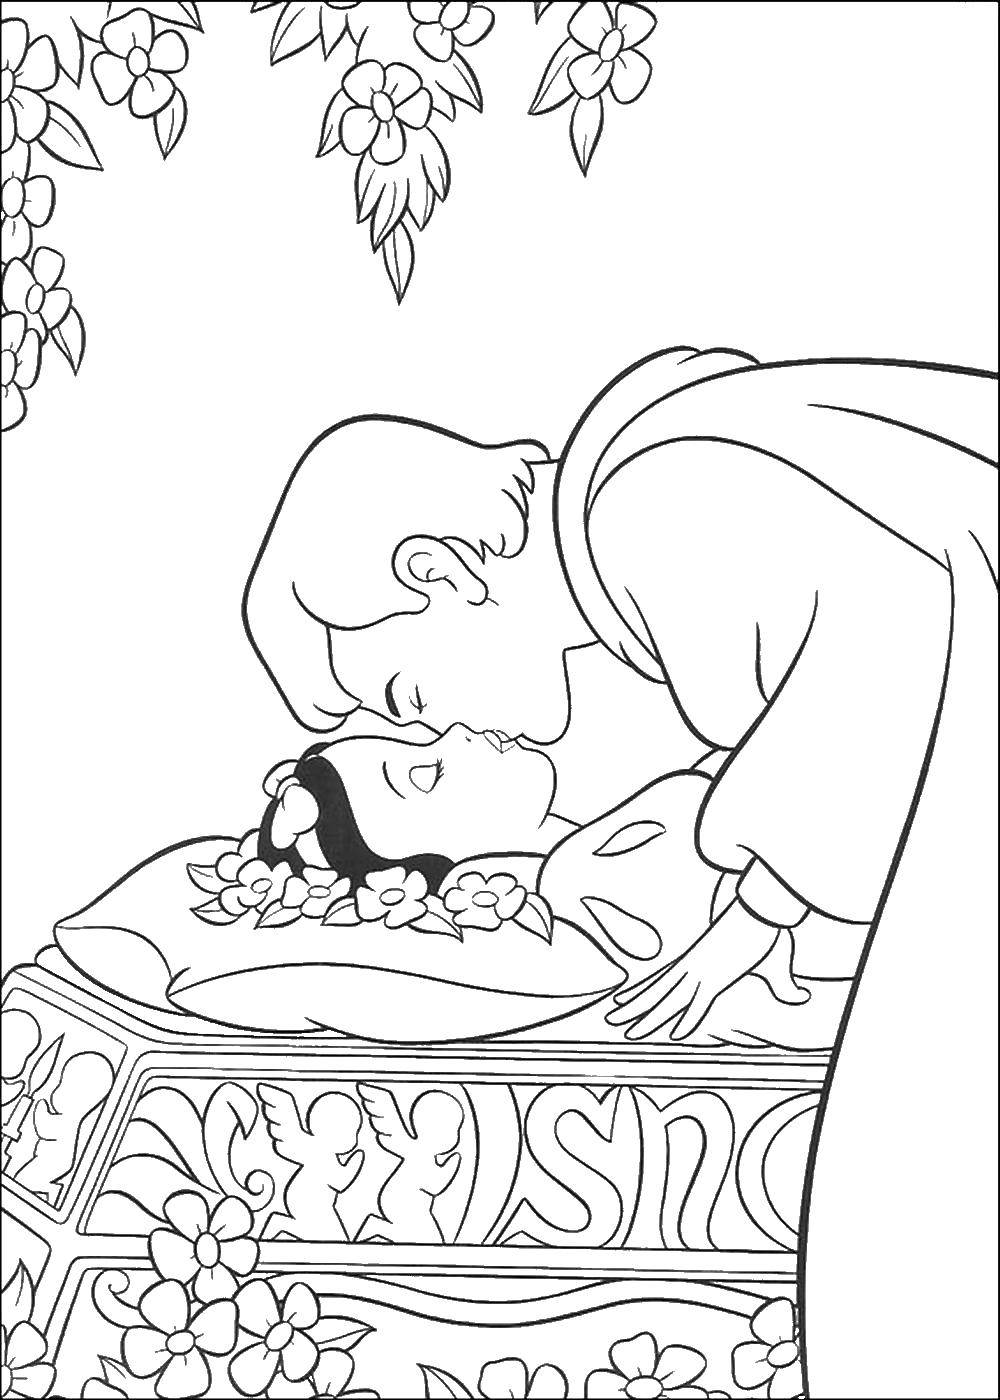 Coloring The Prince kisses snow white to awaken. Category Disney cartoons. Tags:  Disney, Snow White.